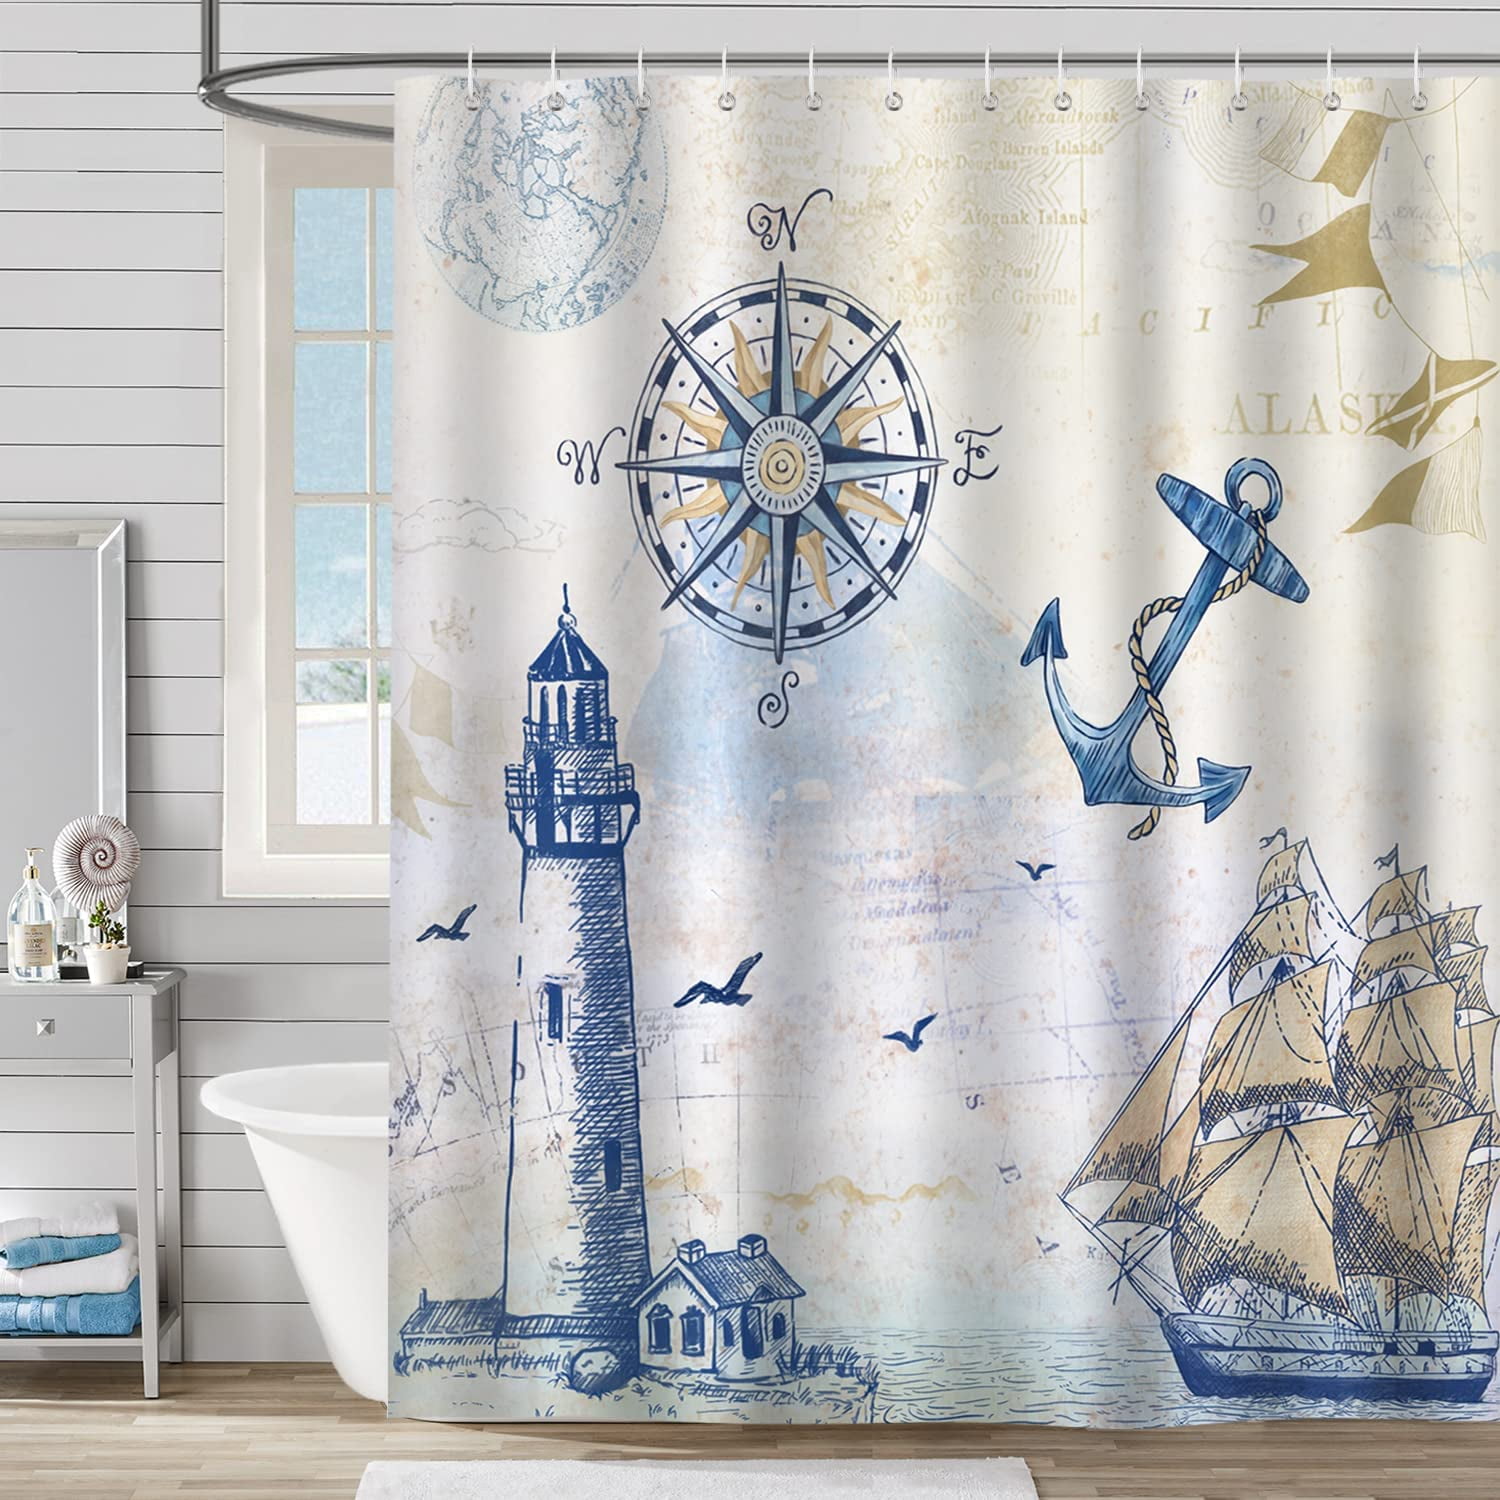 72x72'' Marine Life And On Shabby Bathroom Waterproof Shower Curtain 12 Hooks 